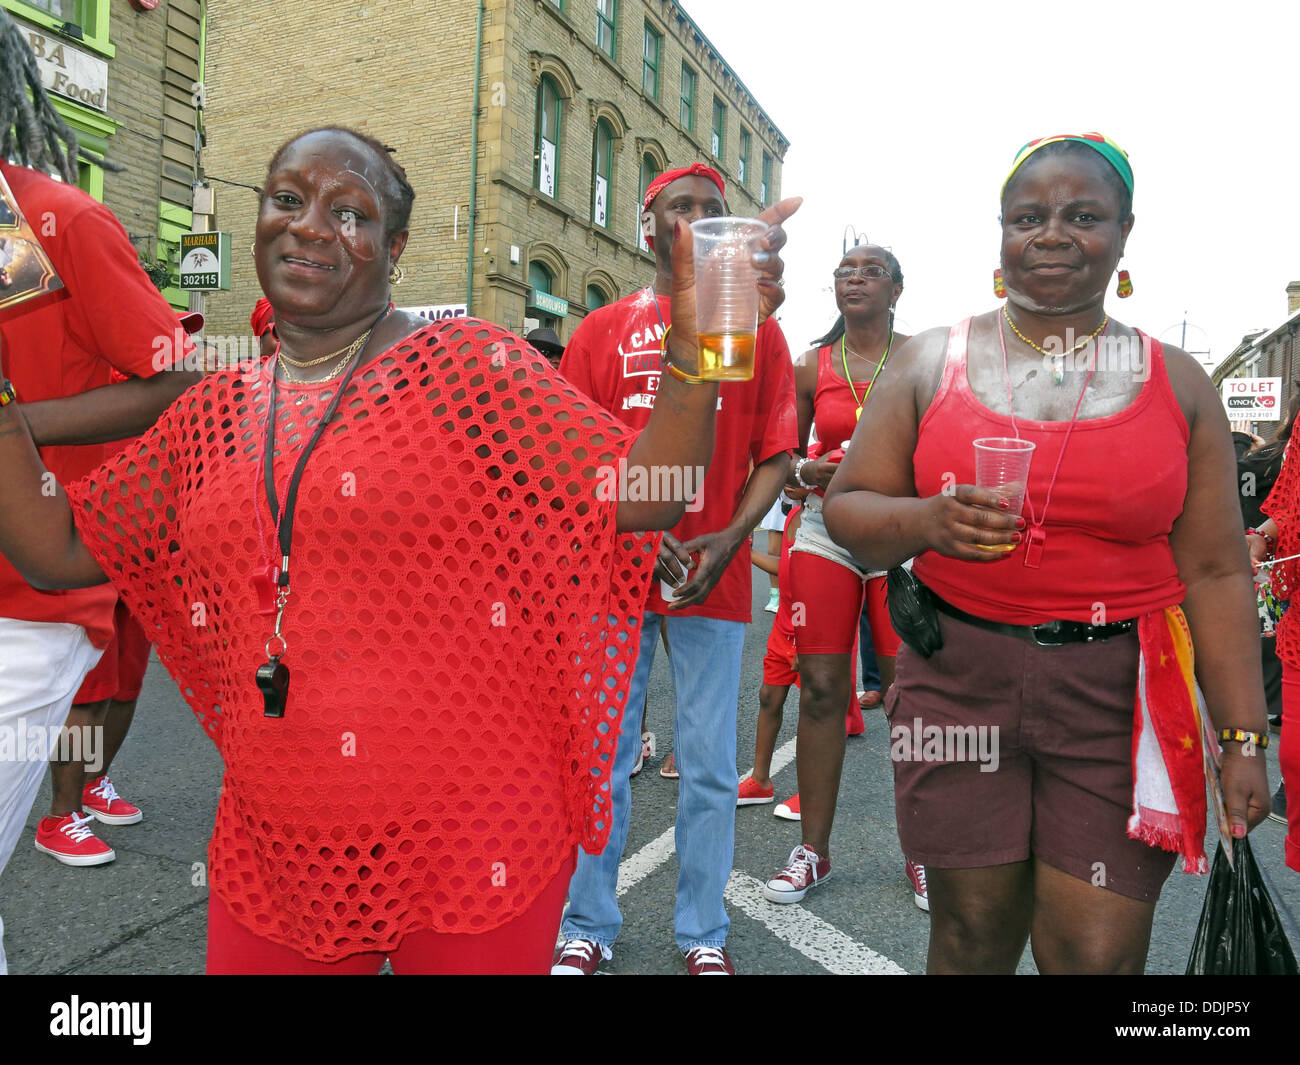 Ballerini in costume in rosso da Huddersfield Carnevale 2013 Caraibi africani parade street party Foto Stock